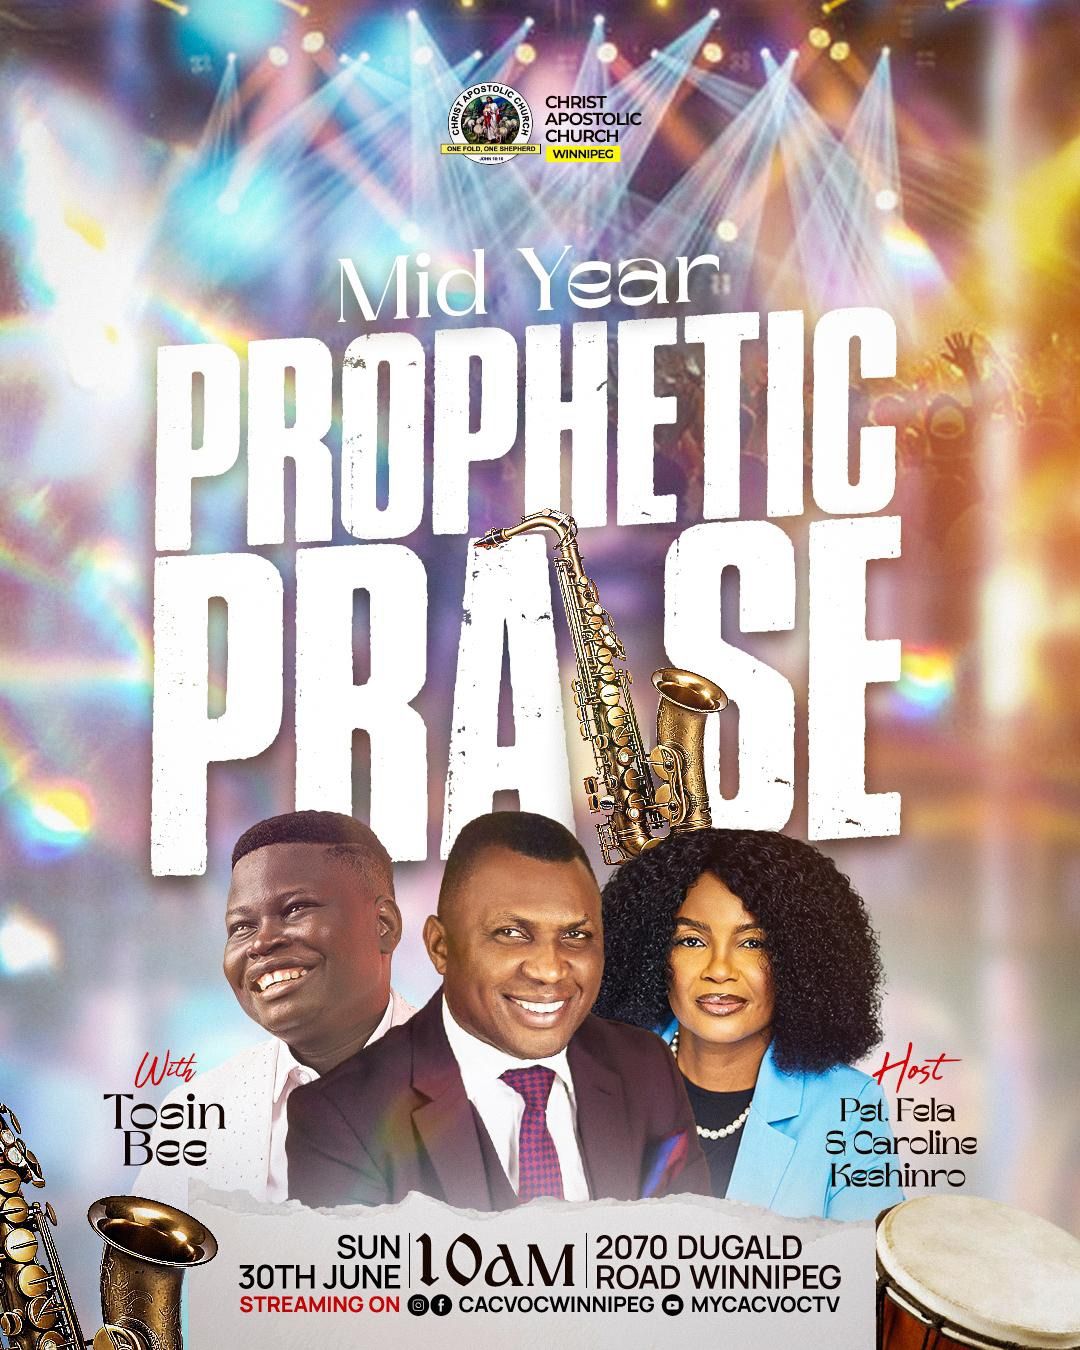 Mid Year Prophetic Praise